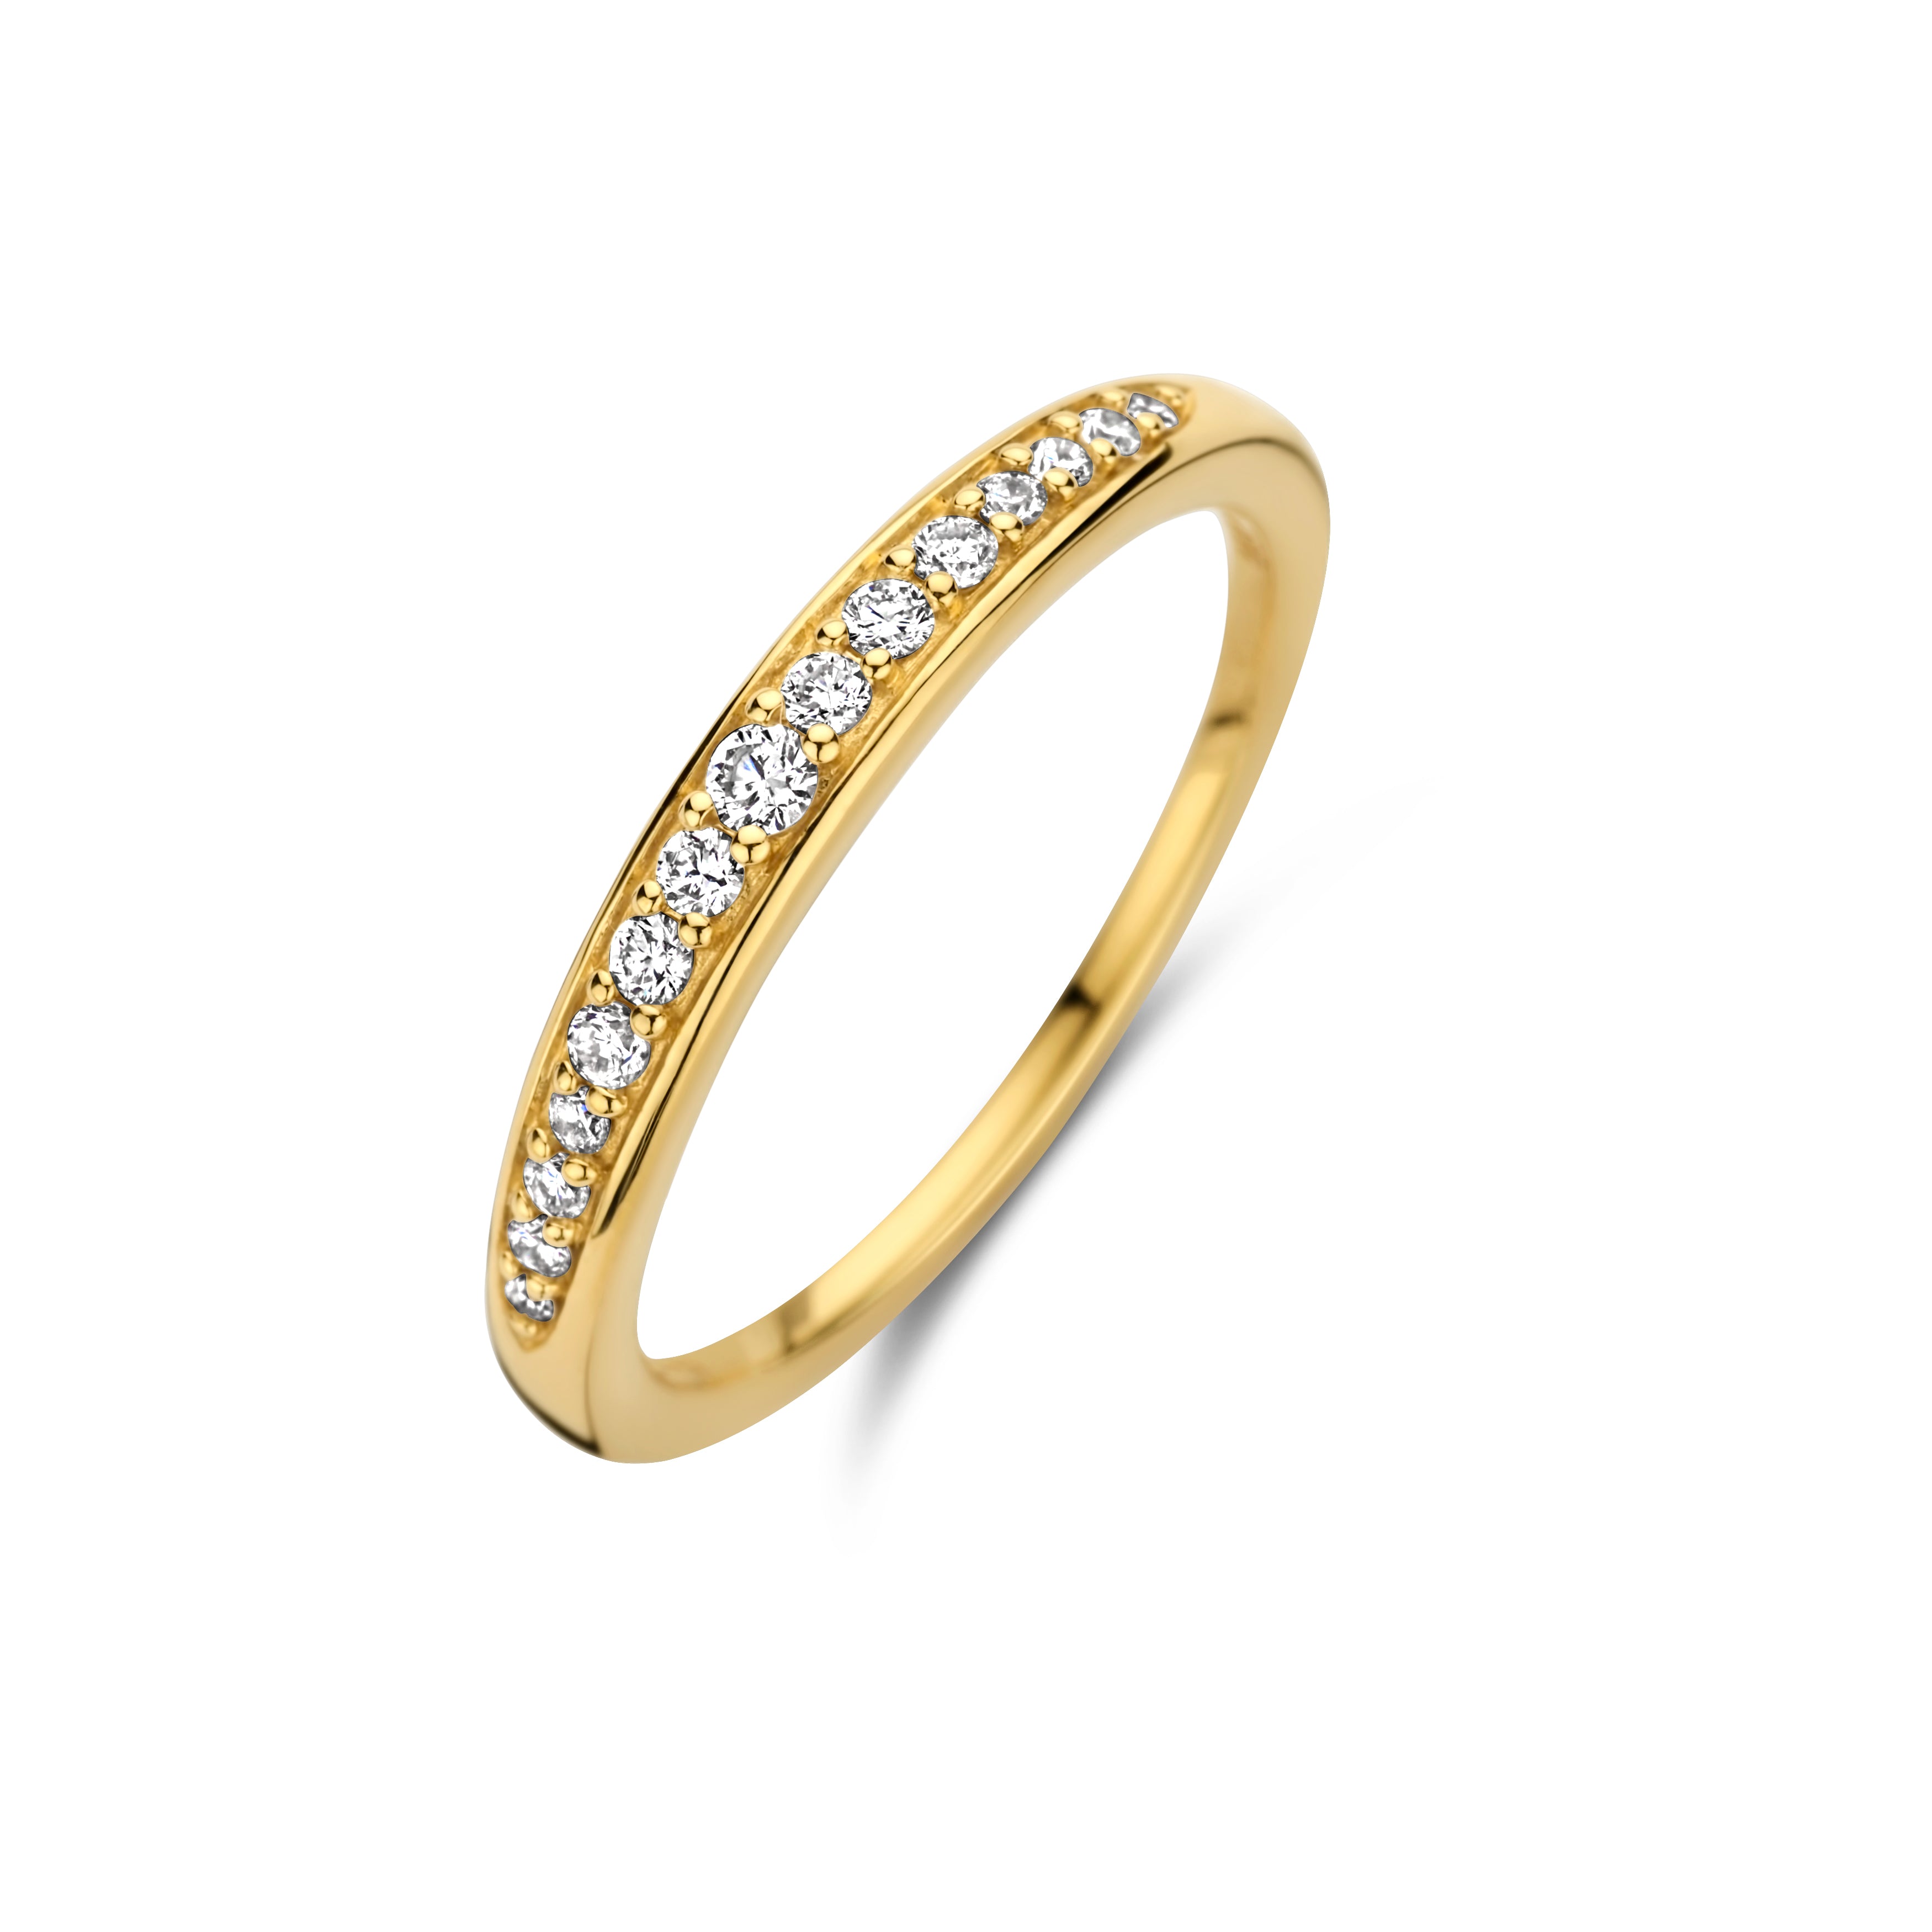 Treasure ring (S) - 14kt. guld med brillantslebne diamanter-1